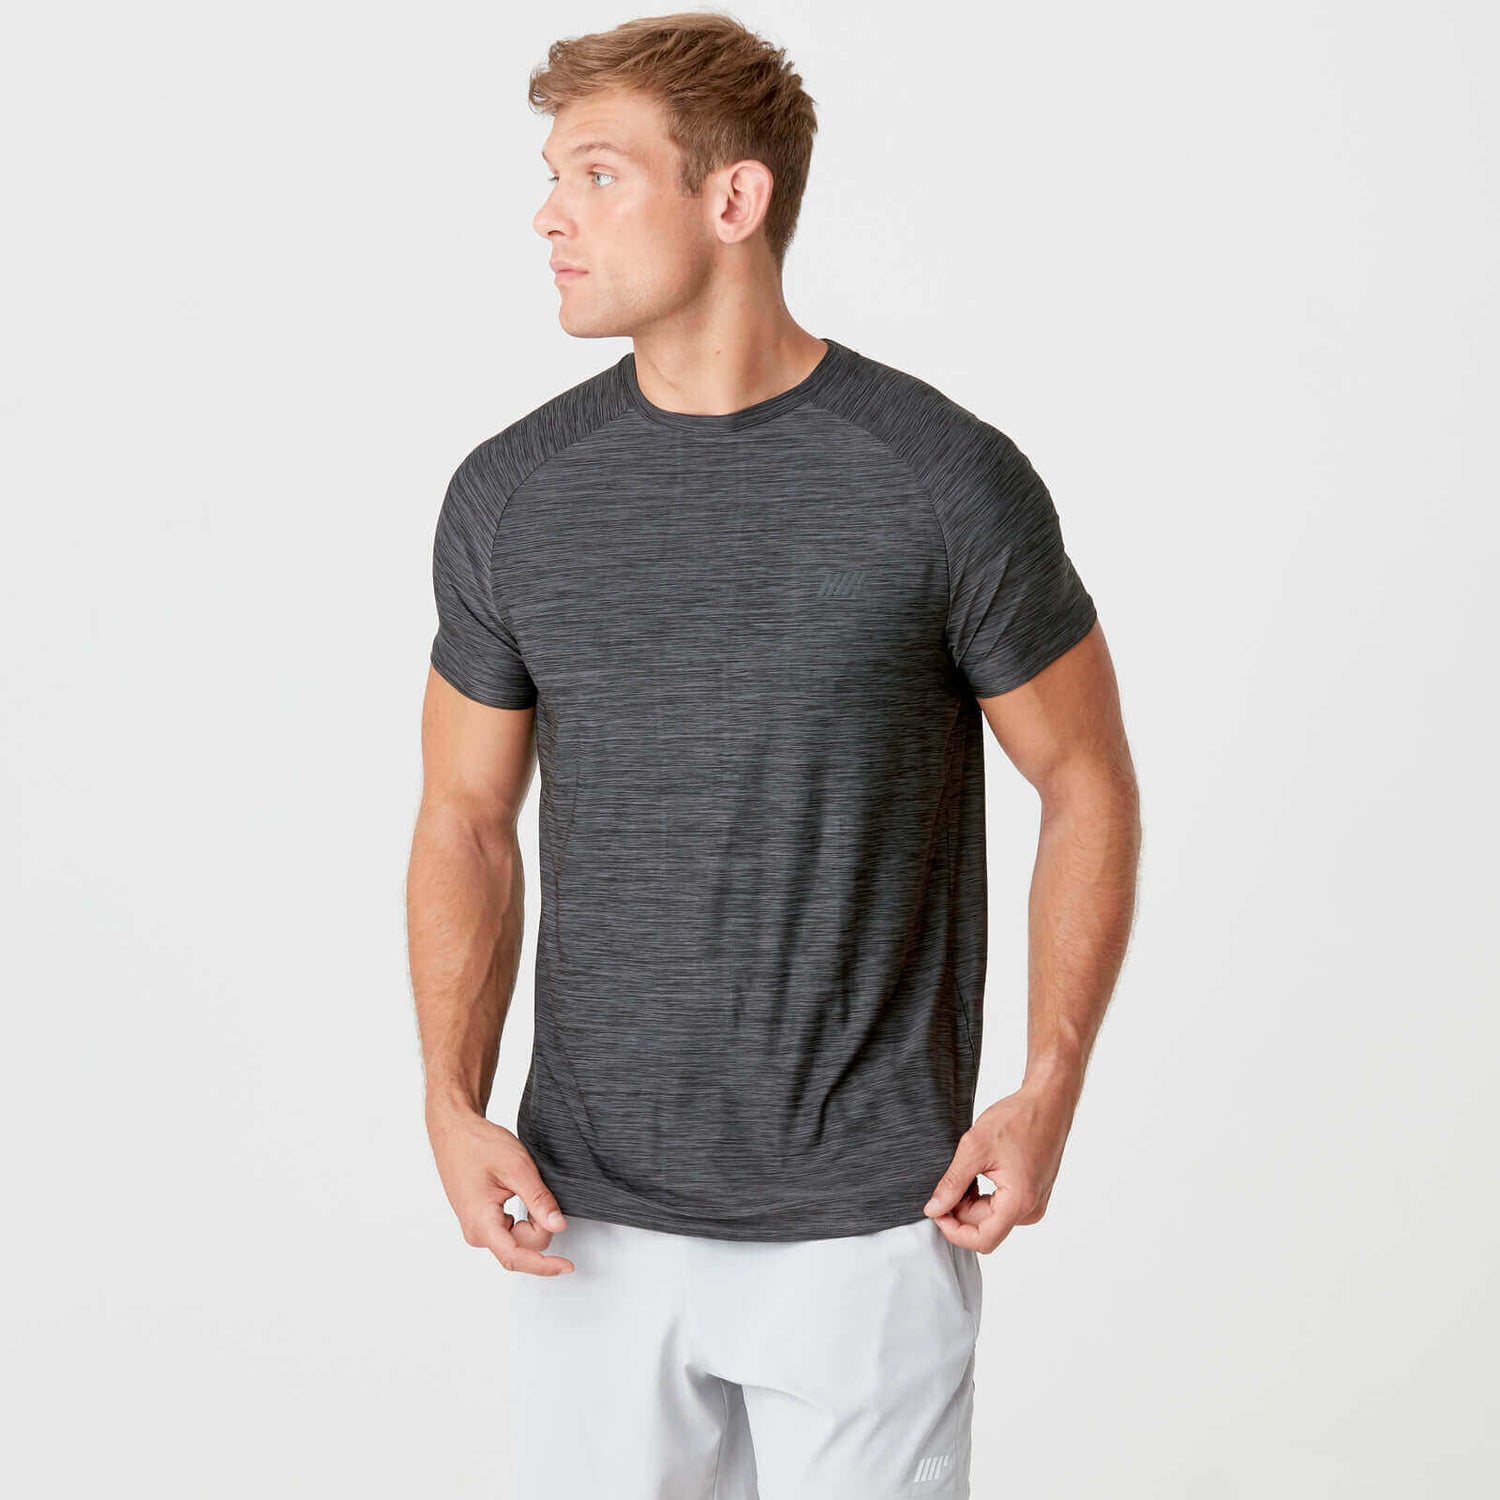 Buy Men's Dry-Tech Sweat-Wicking Gym Shirt, Slate Marl